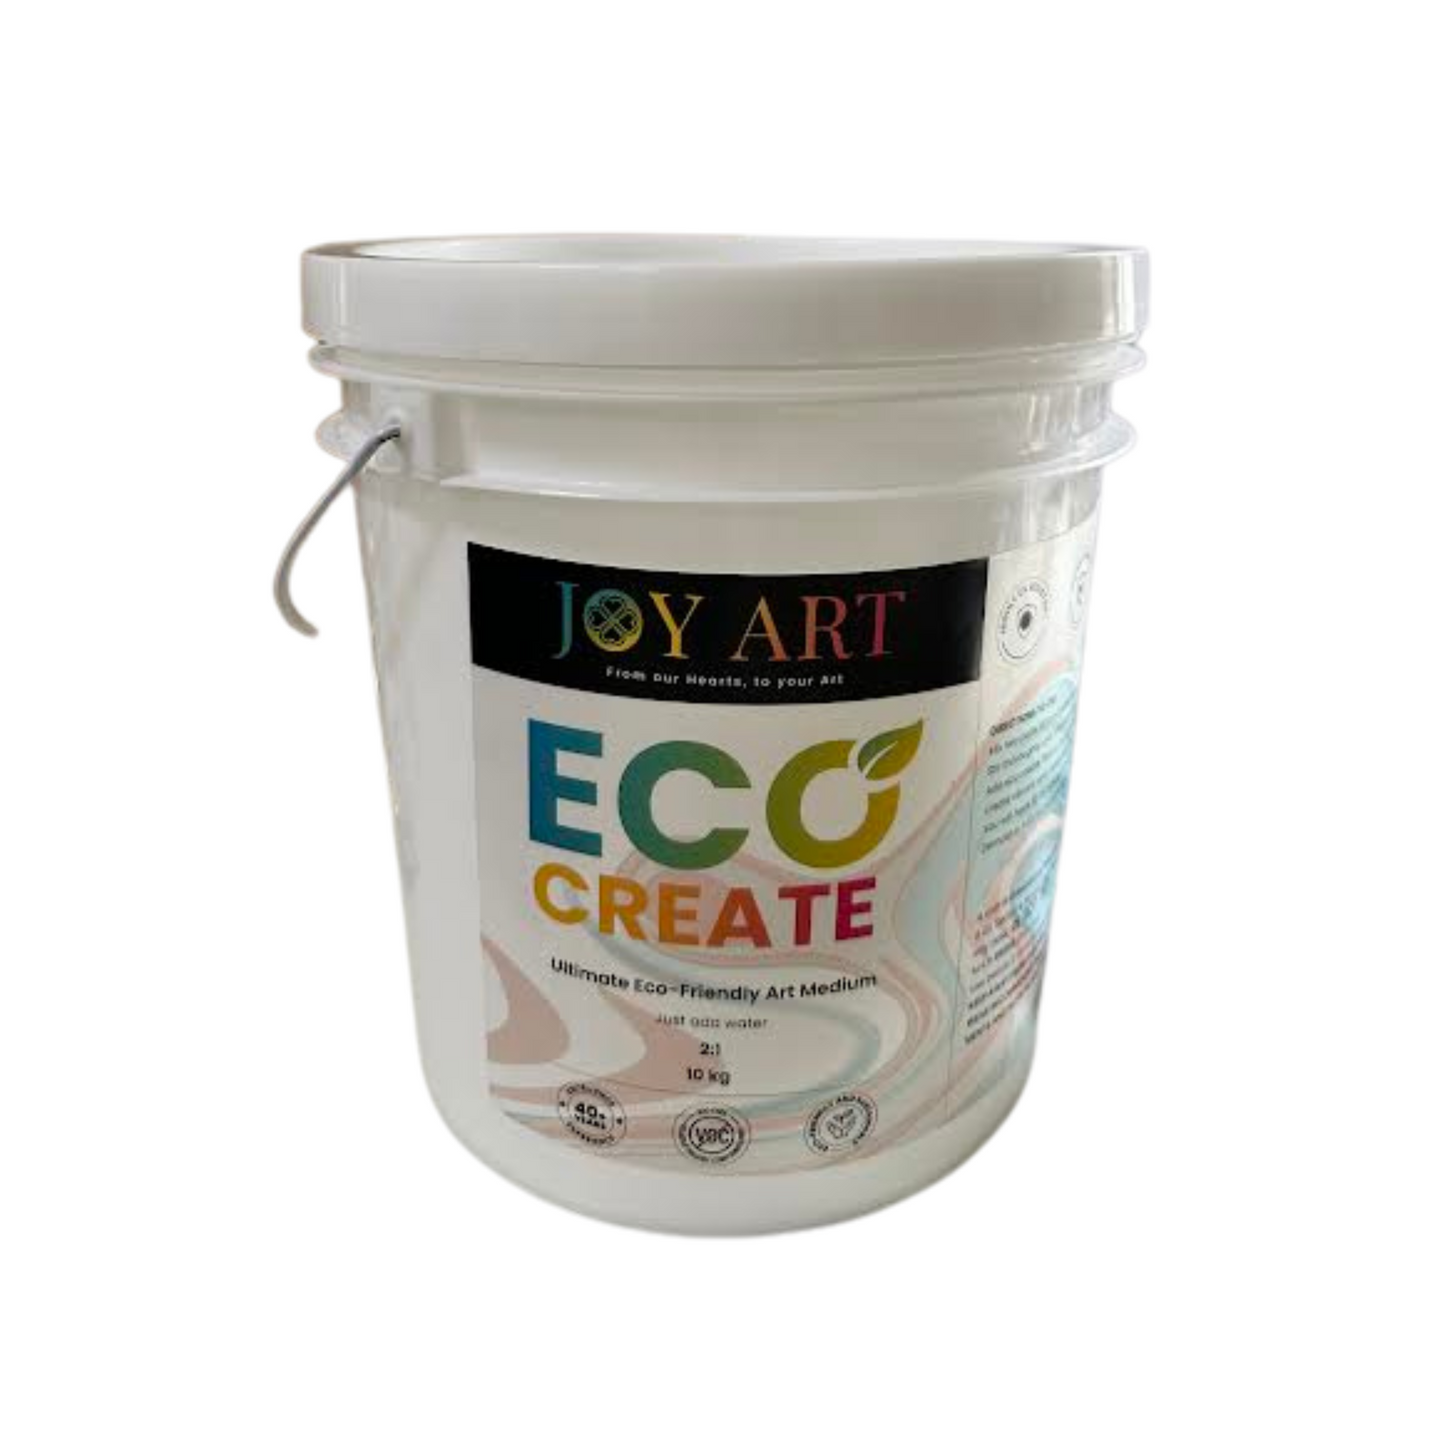 10 kg Eco Create